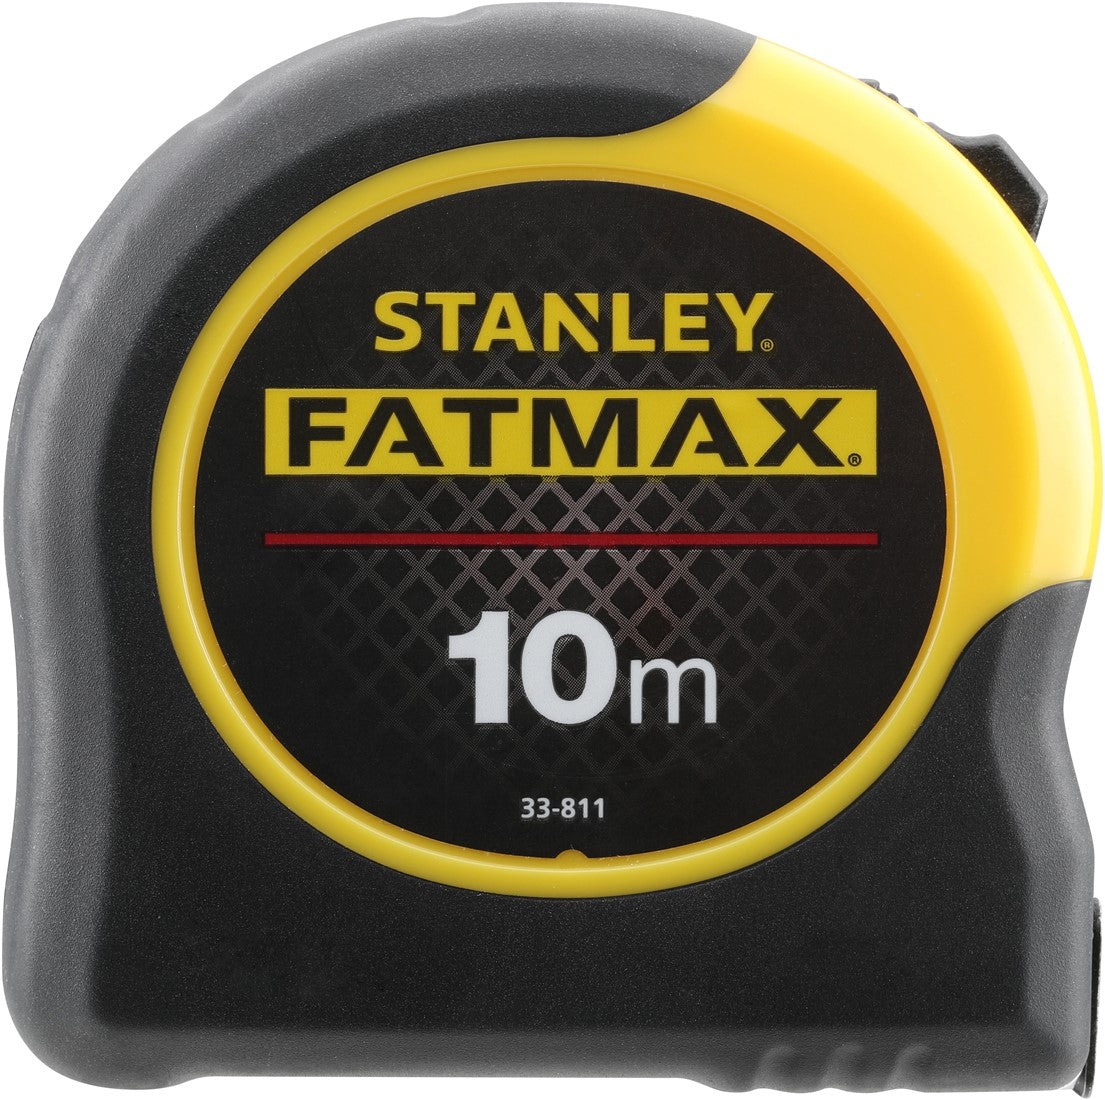 Stanley 0-33-811 FatMax Rolmeter Blade Armor 10m - 32mm